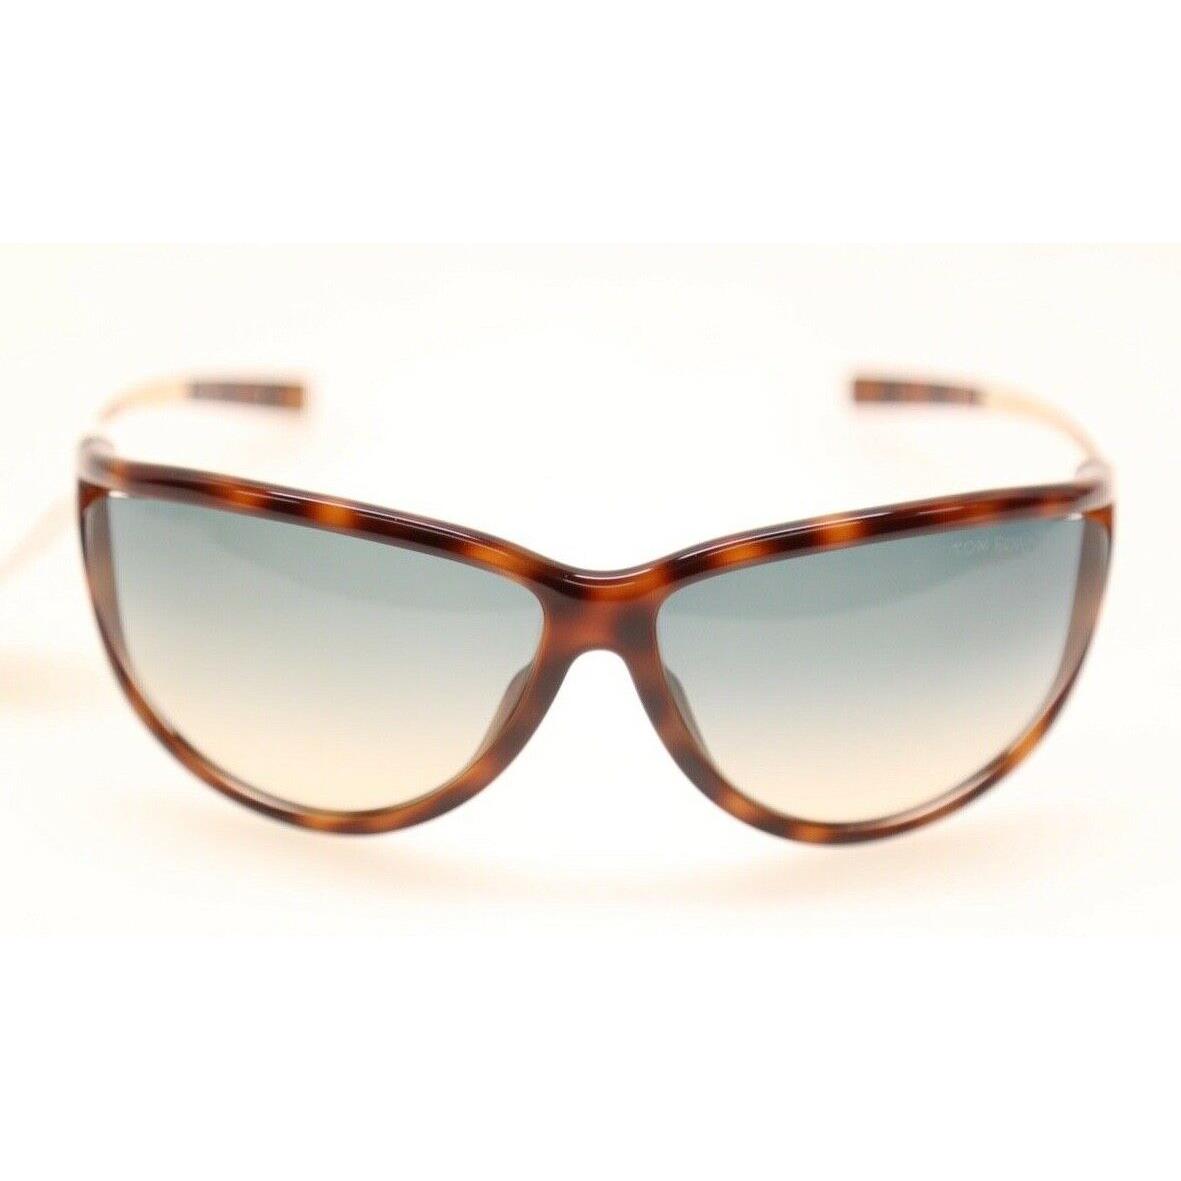 Tom Ford Tammy FT0770 TF770 56W Havana/turquoise Gradient Sunglasses 537 - Frame: Havana, Lens: Turquoise, Manufacturer: